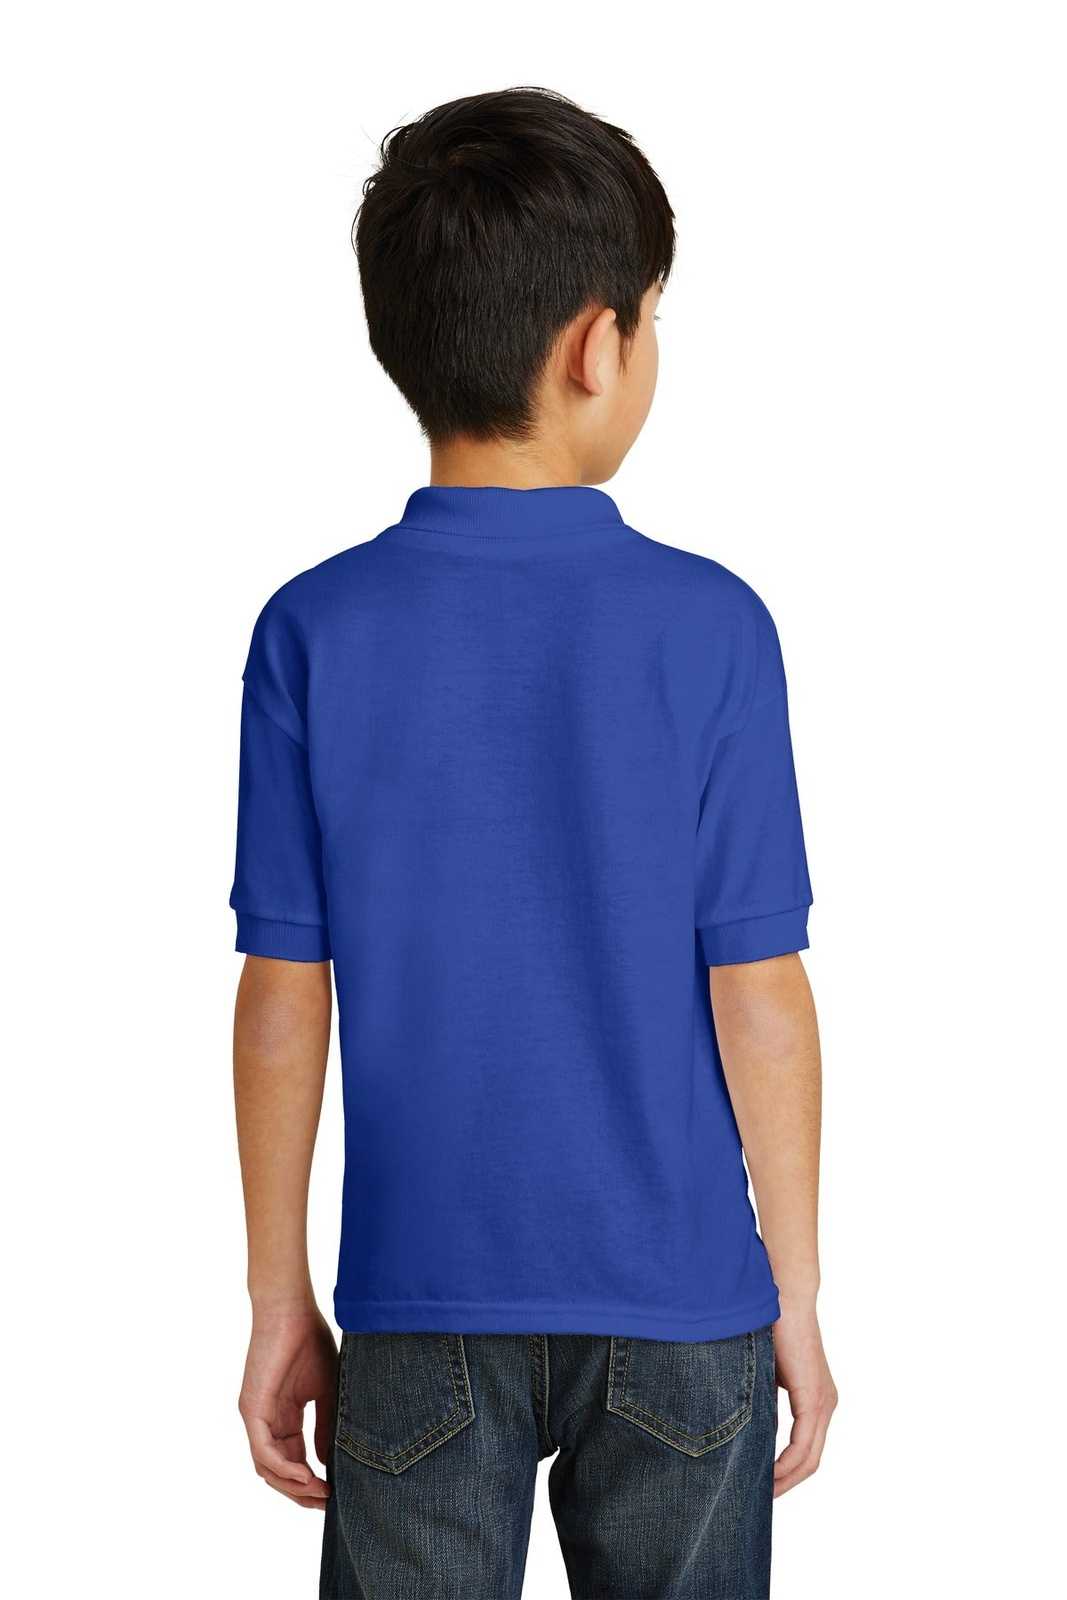 Gildan 8800B Youth Dryblend 6-Ounce Jersey Knit Sport Shirt - Royal - HIT a Double